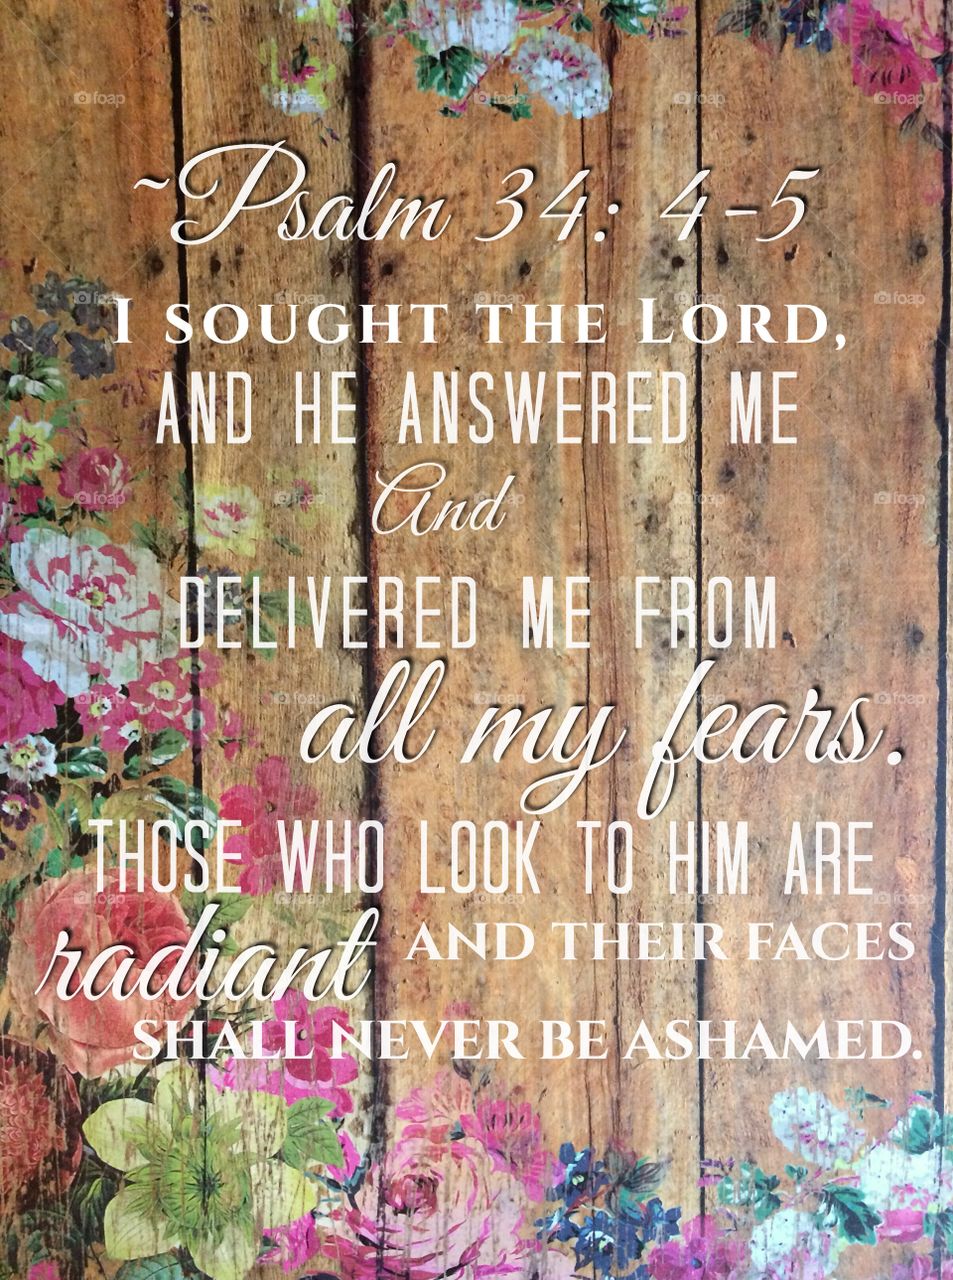 Psalm 34: 4-5
